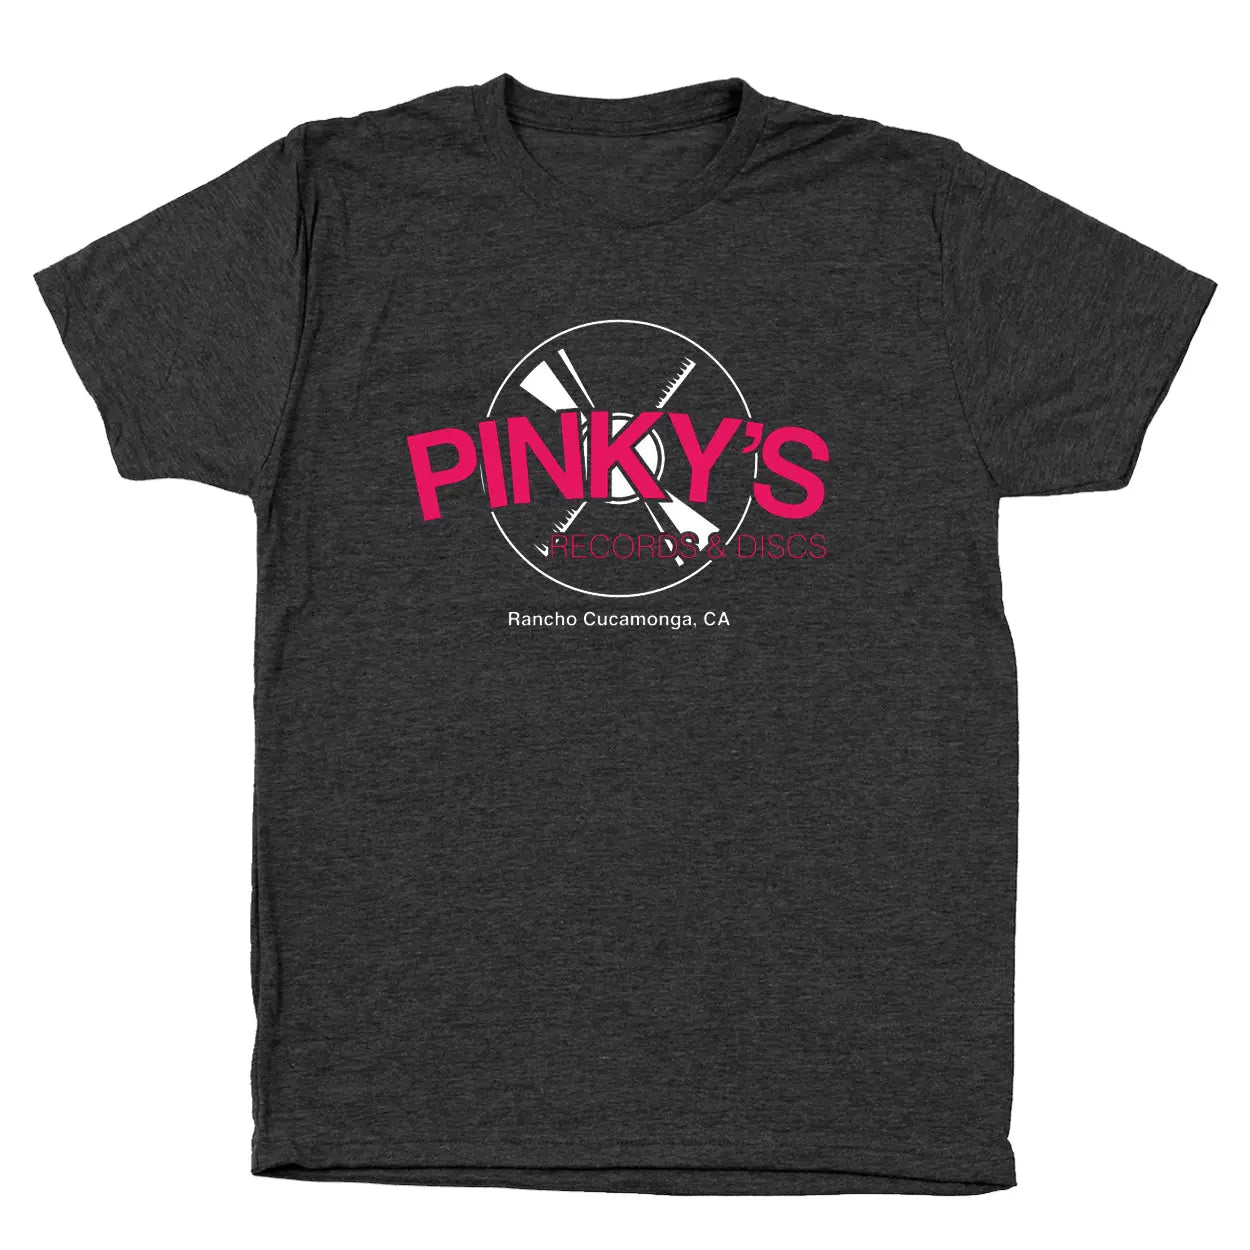 Pinky's Records Tshirt - Donkey Tees